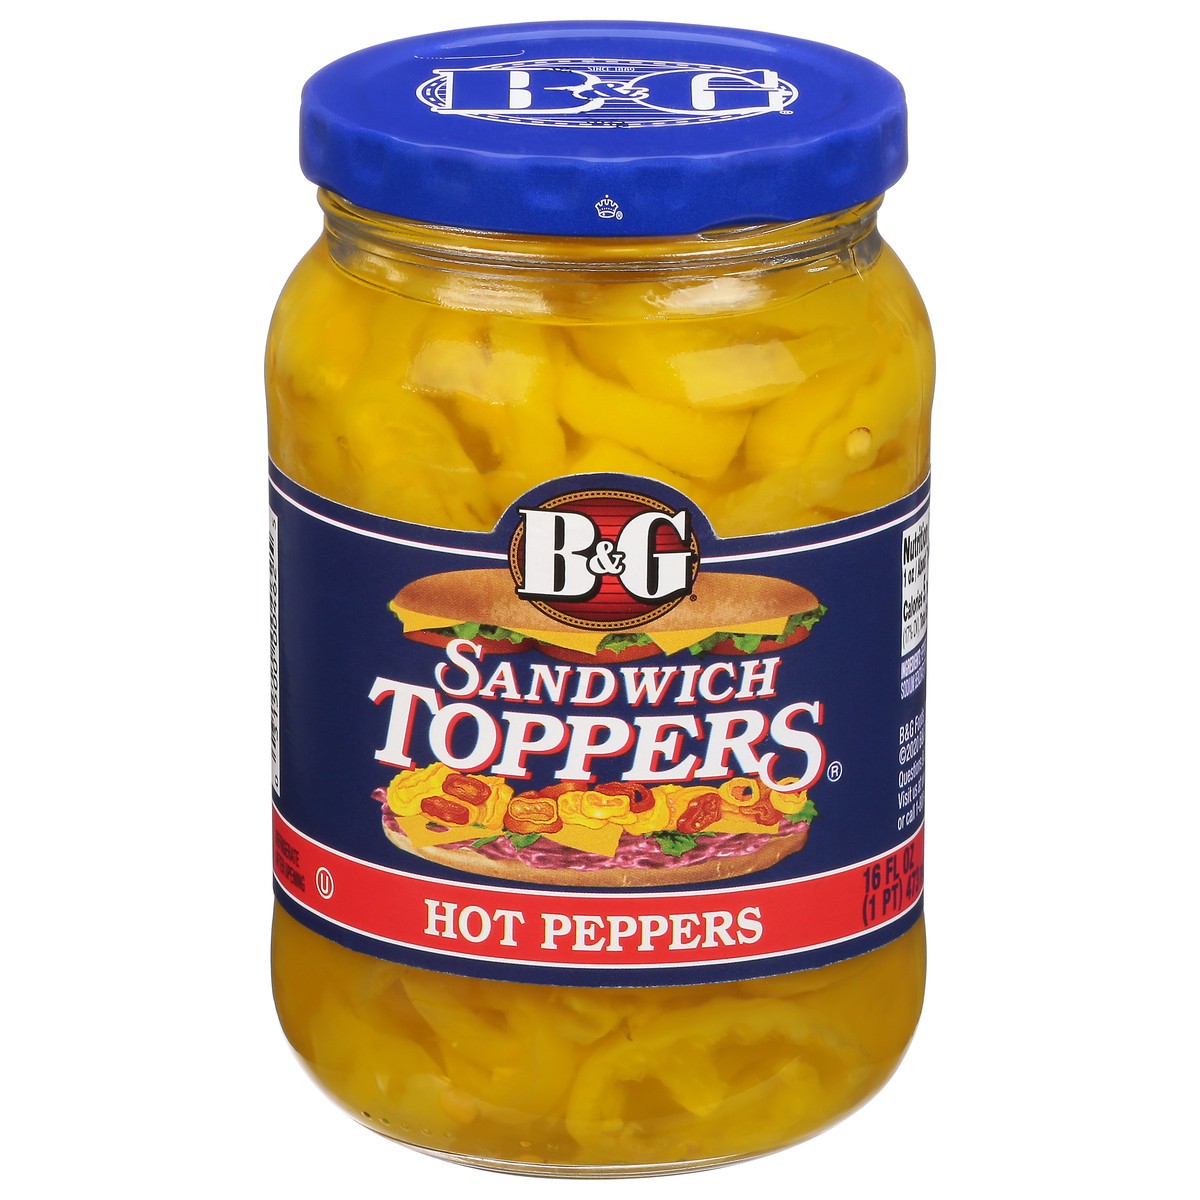 slide 8 of 14, B&G Sandwich Toppers Hot Peppers 16 fl oz, 16 fl oz